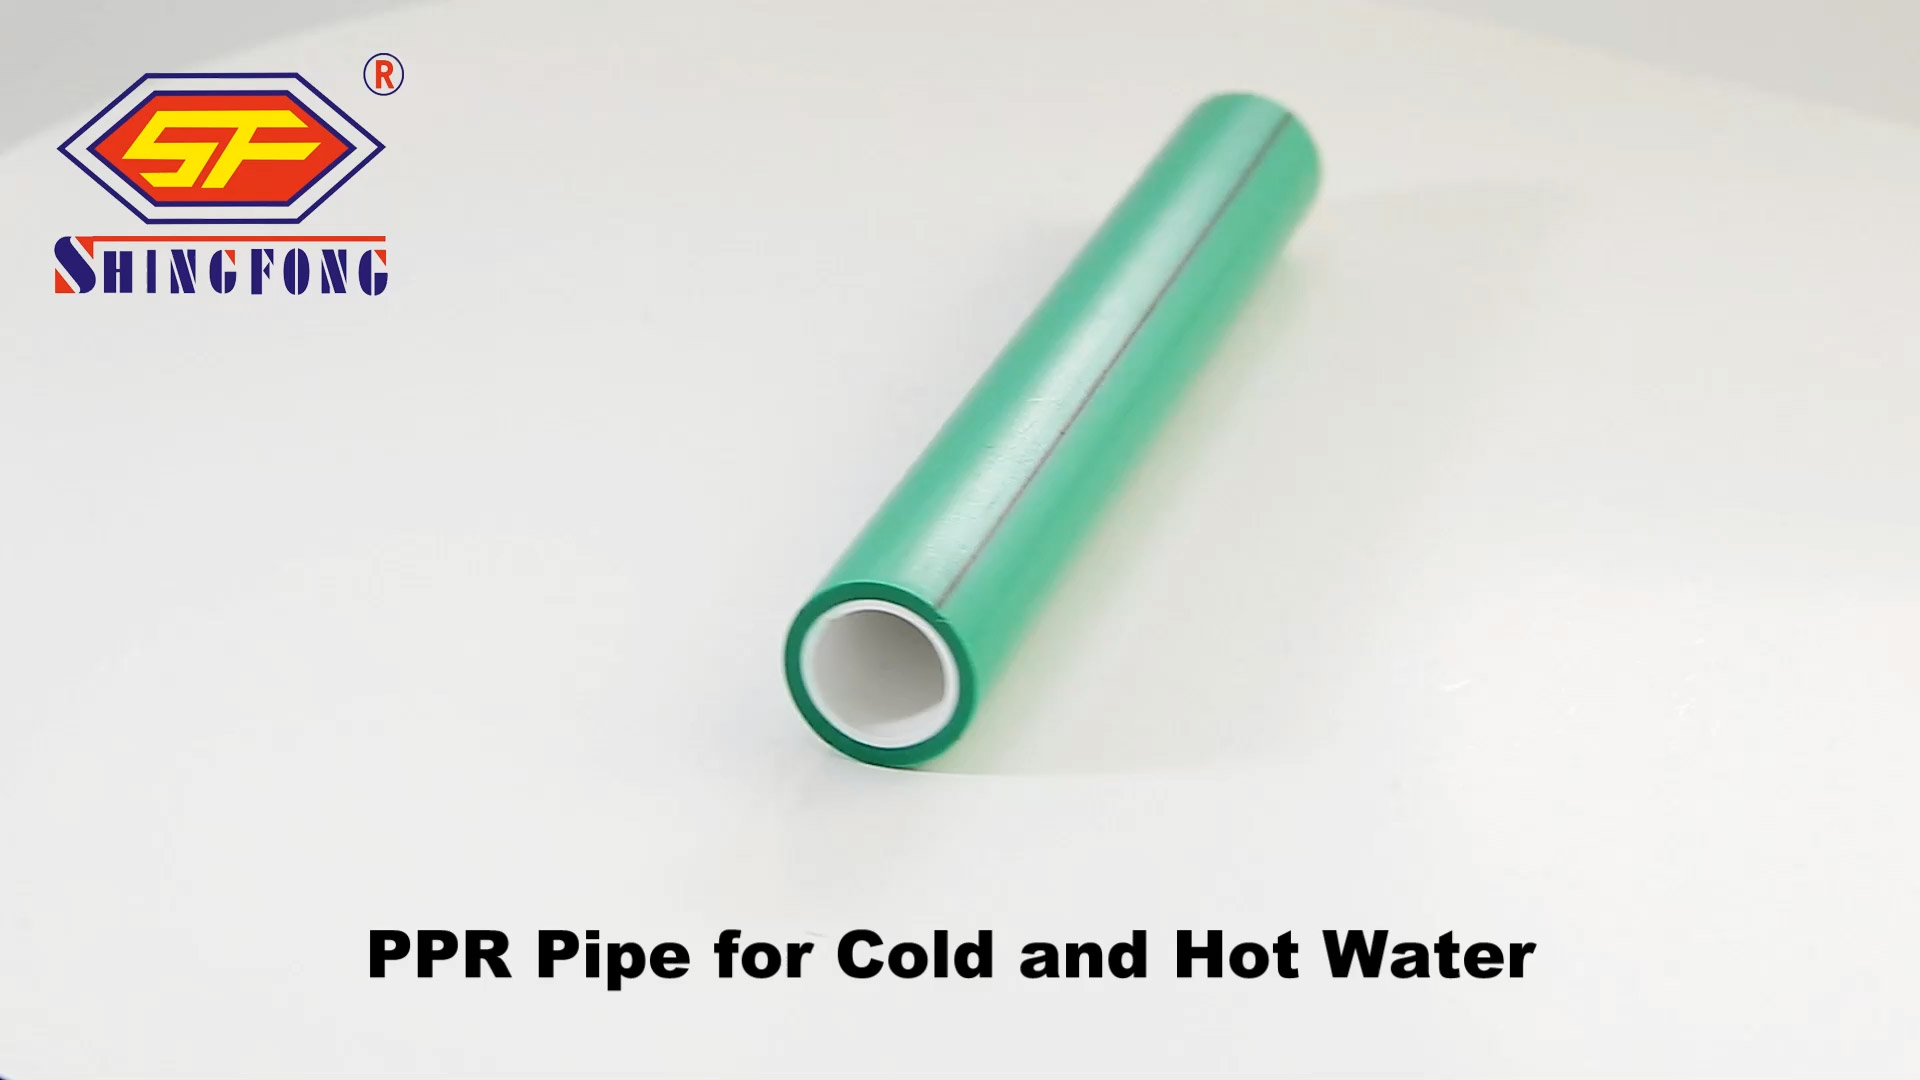 Beste PPR-pyp vir koud- en warmwaterfabriek Prys | Shingfong